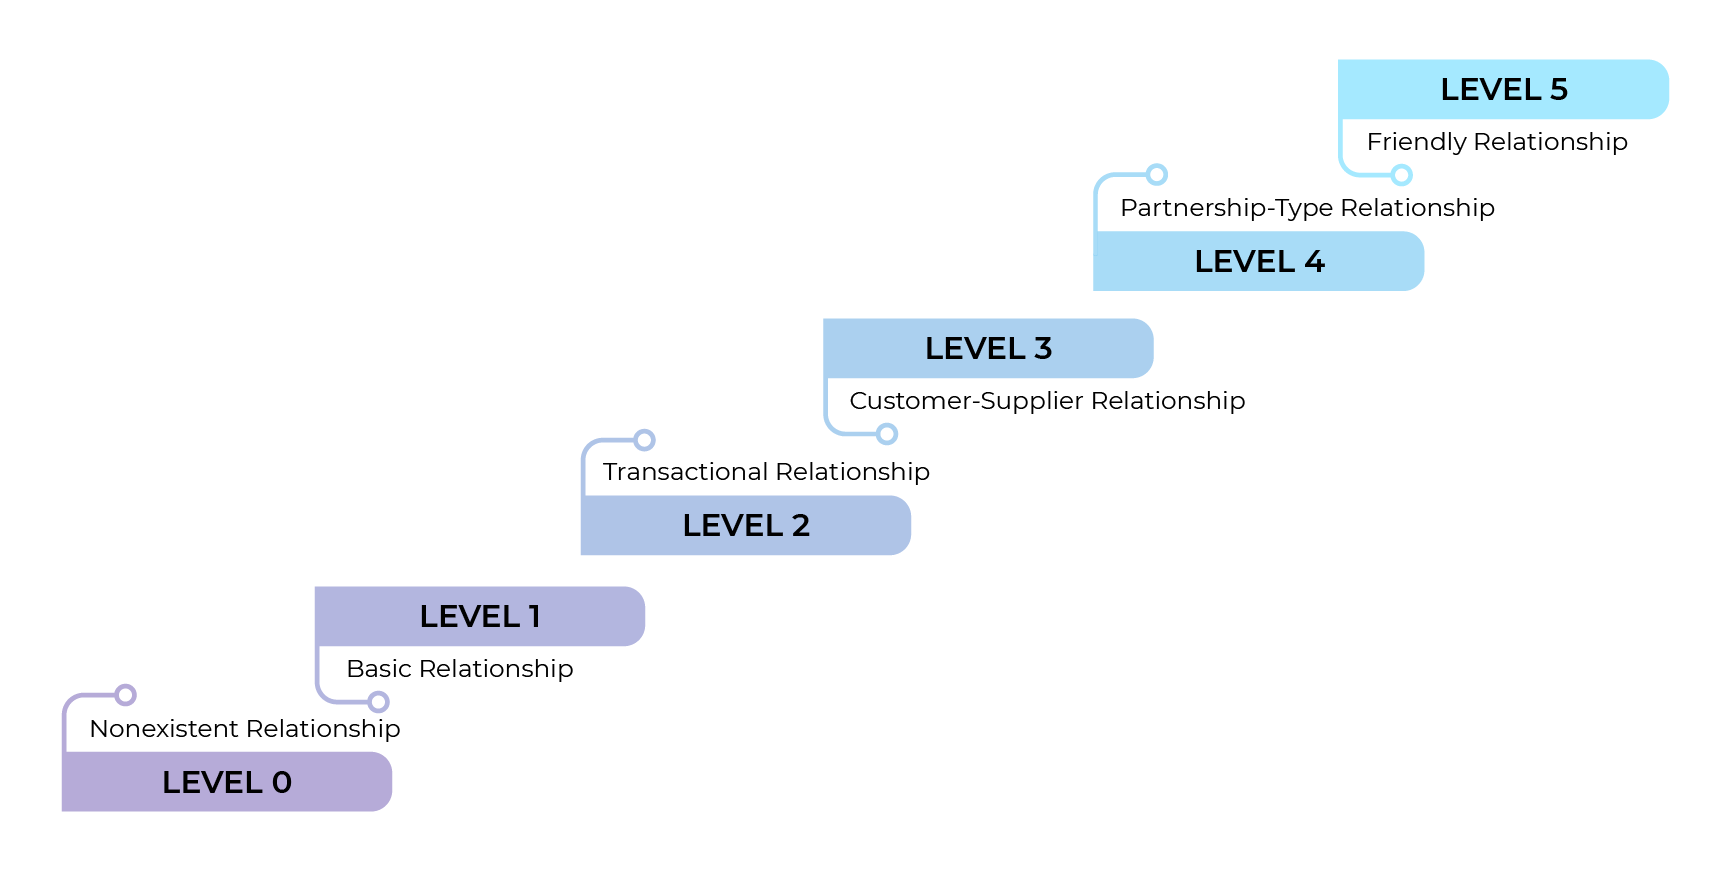 Level 0 Nonexistent Relationship / Level 1 Basic Relationship / Level 2 Transactional Relationship / Level 3 Customer-Supplier Relationship / Level 4 Partnership-Type Relationship / Level 5 Friendly Relationship